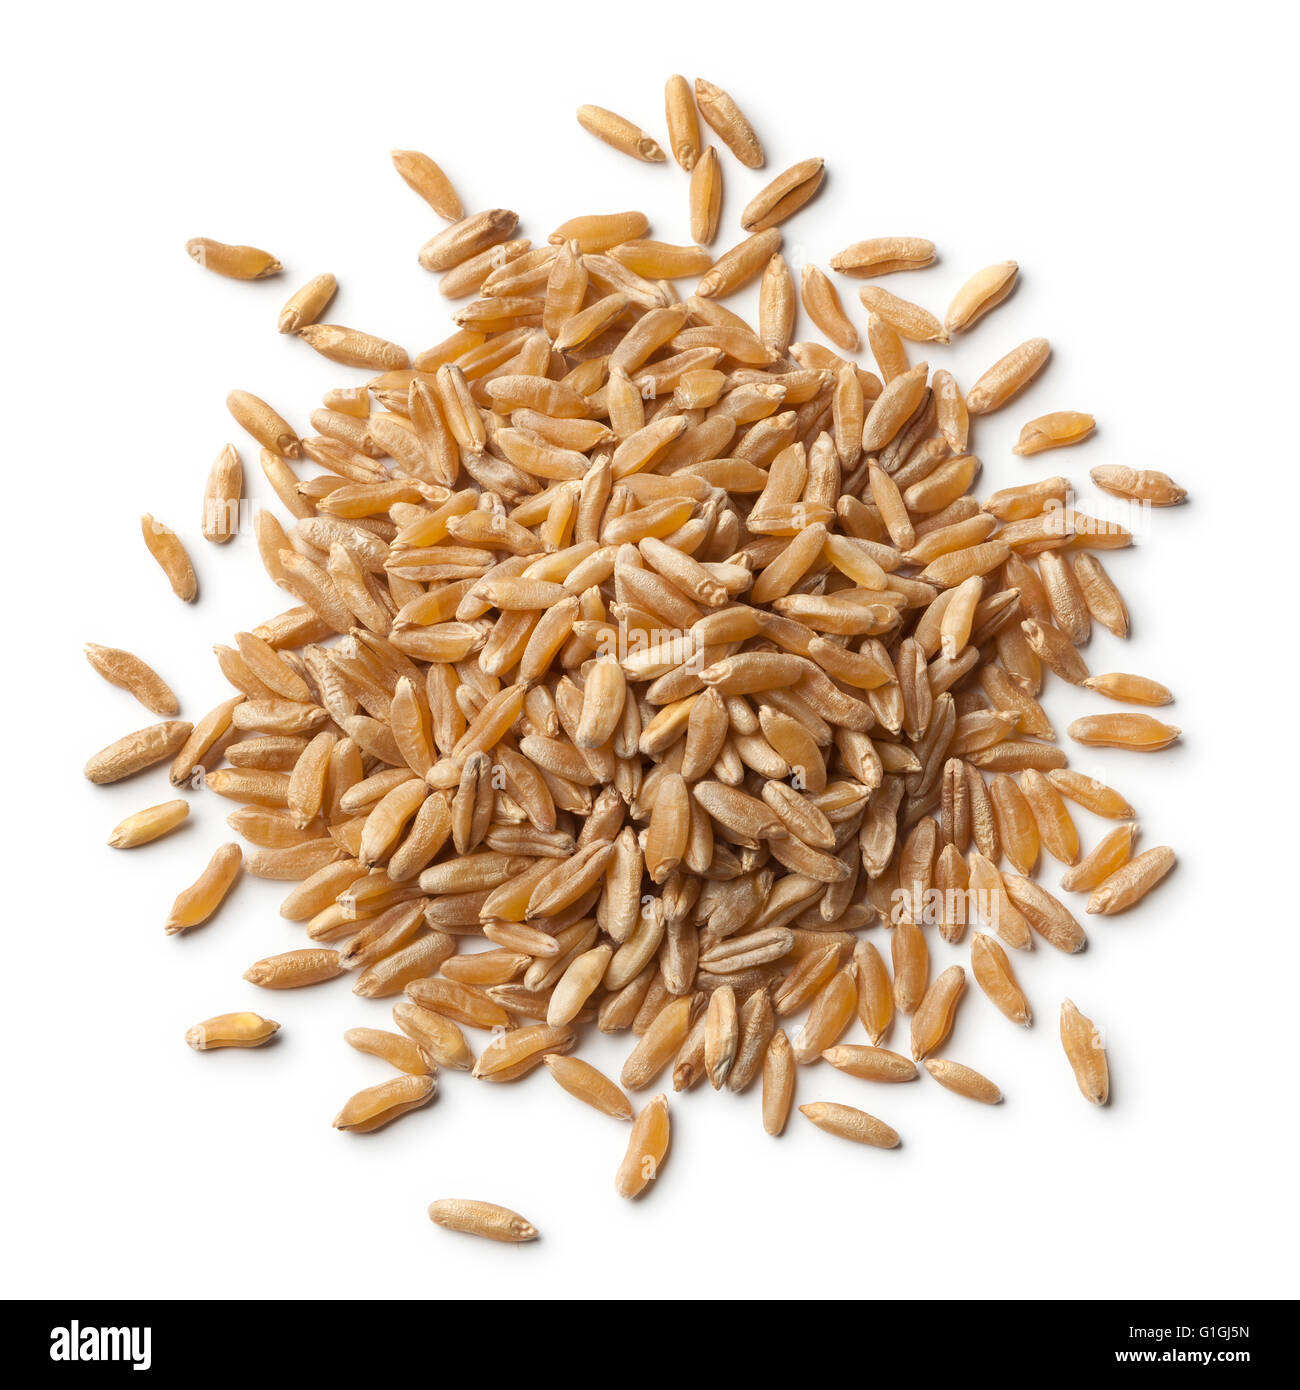 Heap of kamut kernels on white background Stock Photo